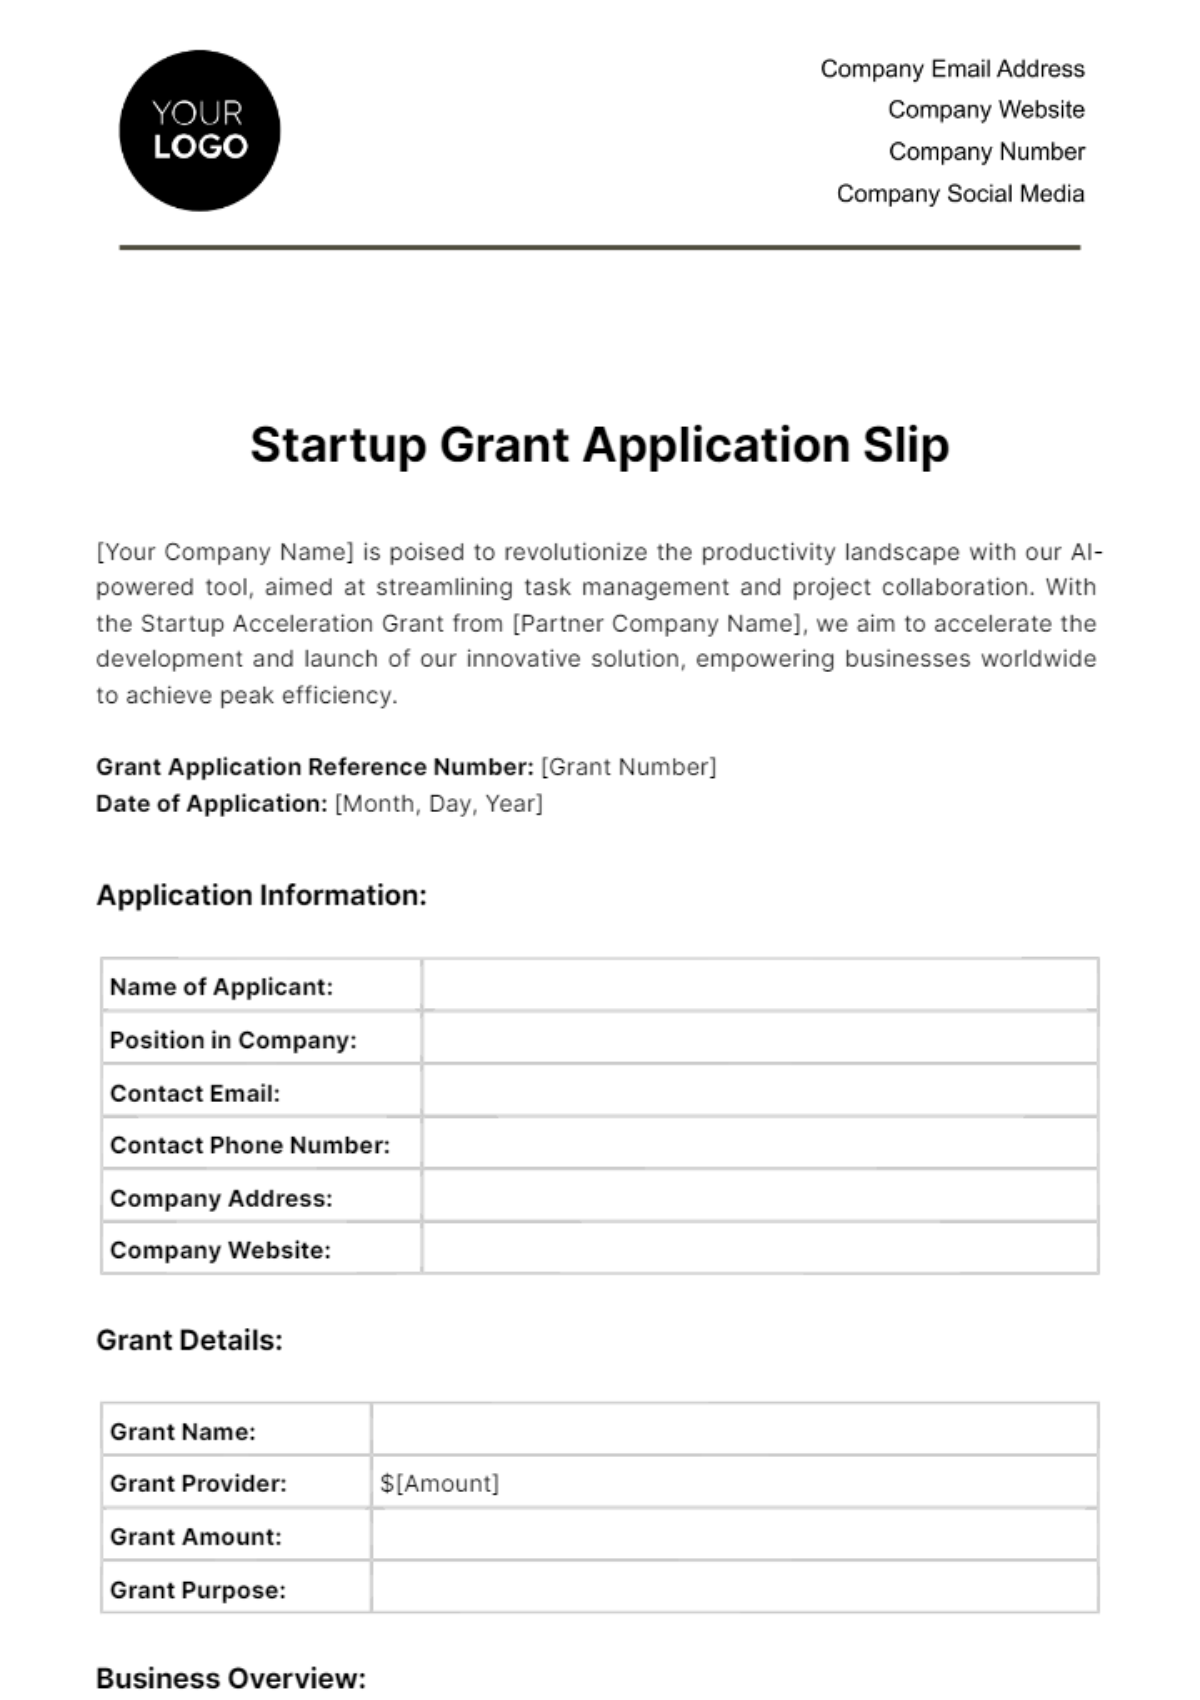 Startup Grant Application Slip Template